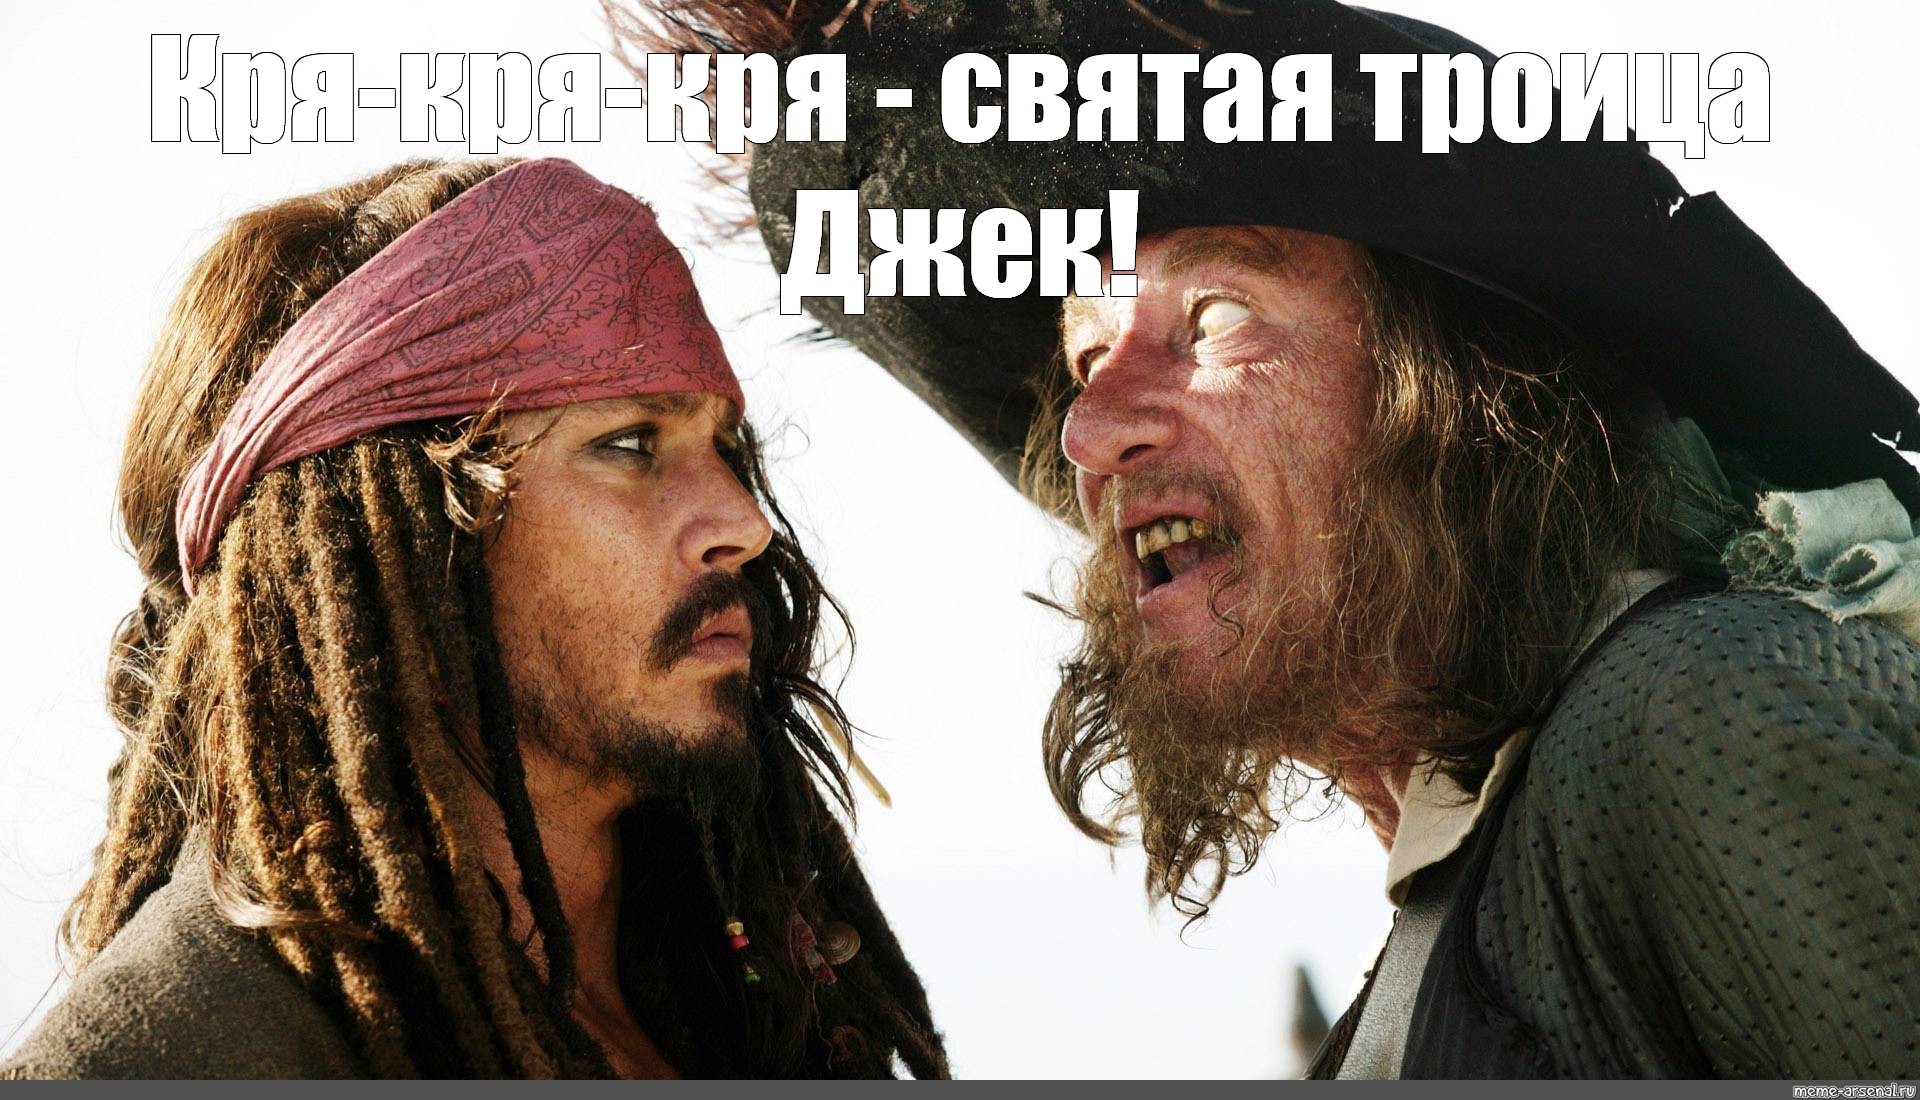 Сomics meme: "pirates of the Caribbean Barbossa actors, Pira